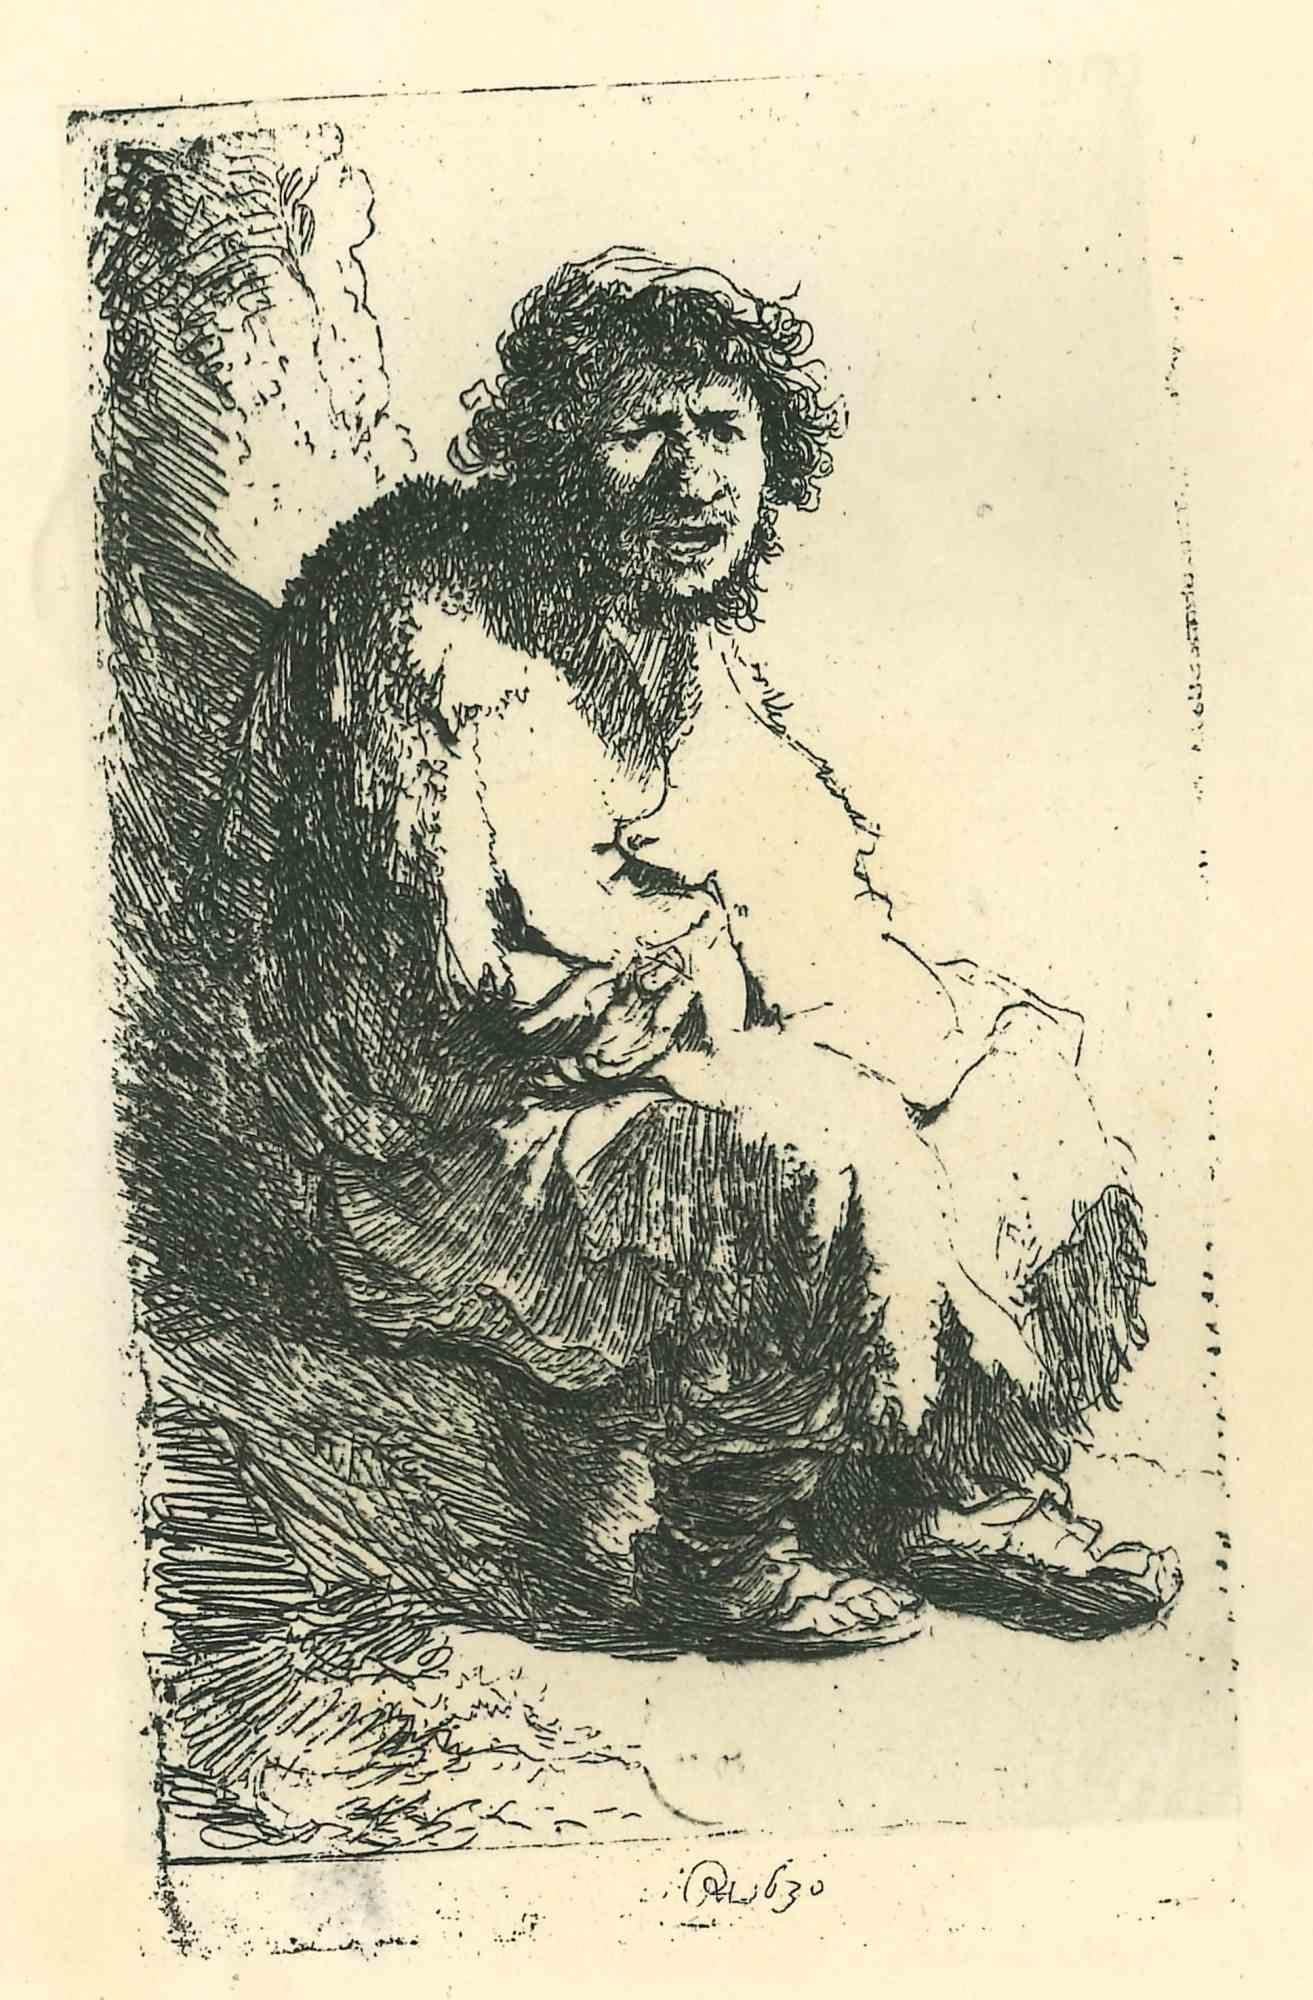 Rembrandt van Rijn Portrait Print - Seated Beggar - Etching After Rembrandt - 19th Century